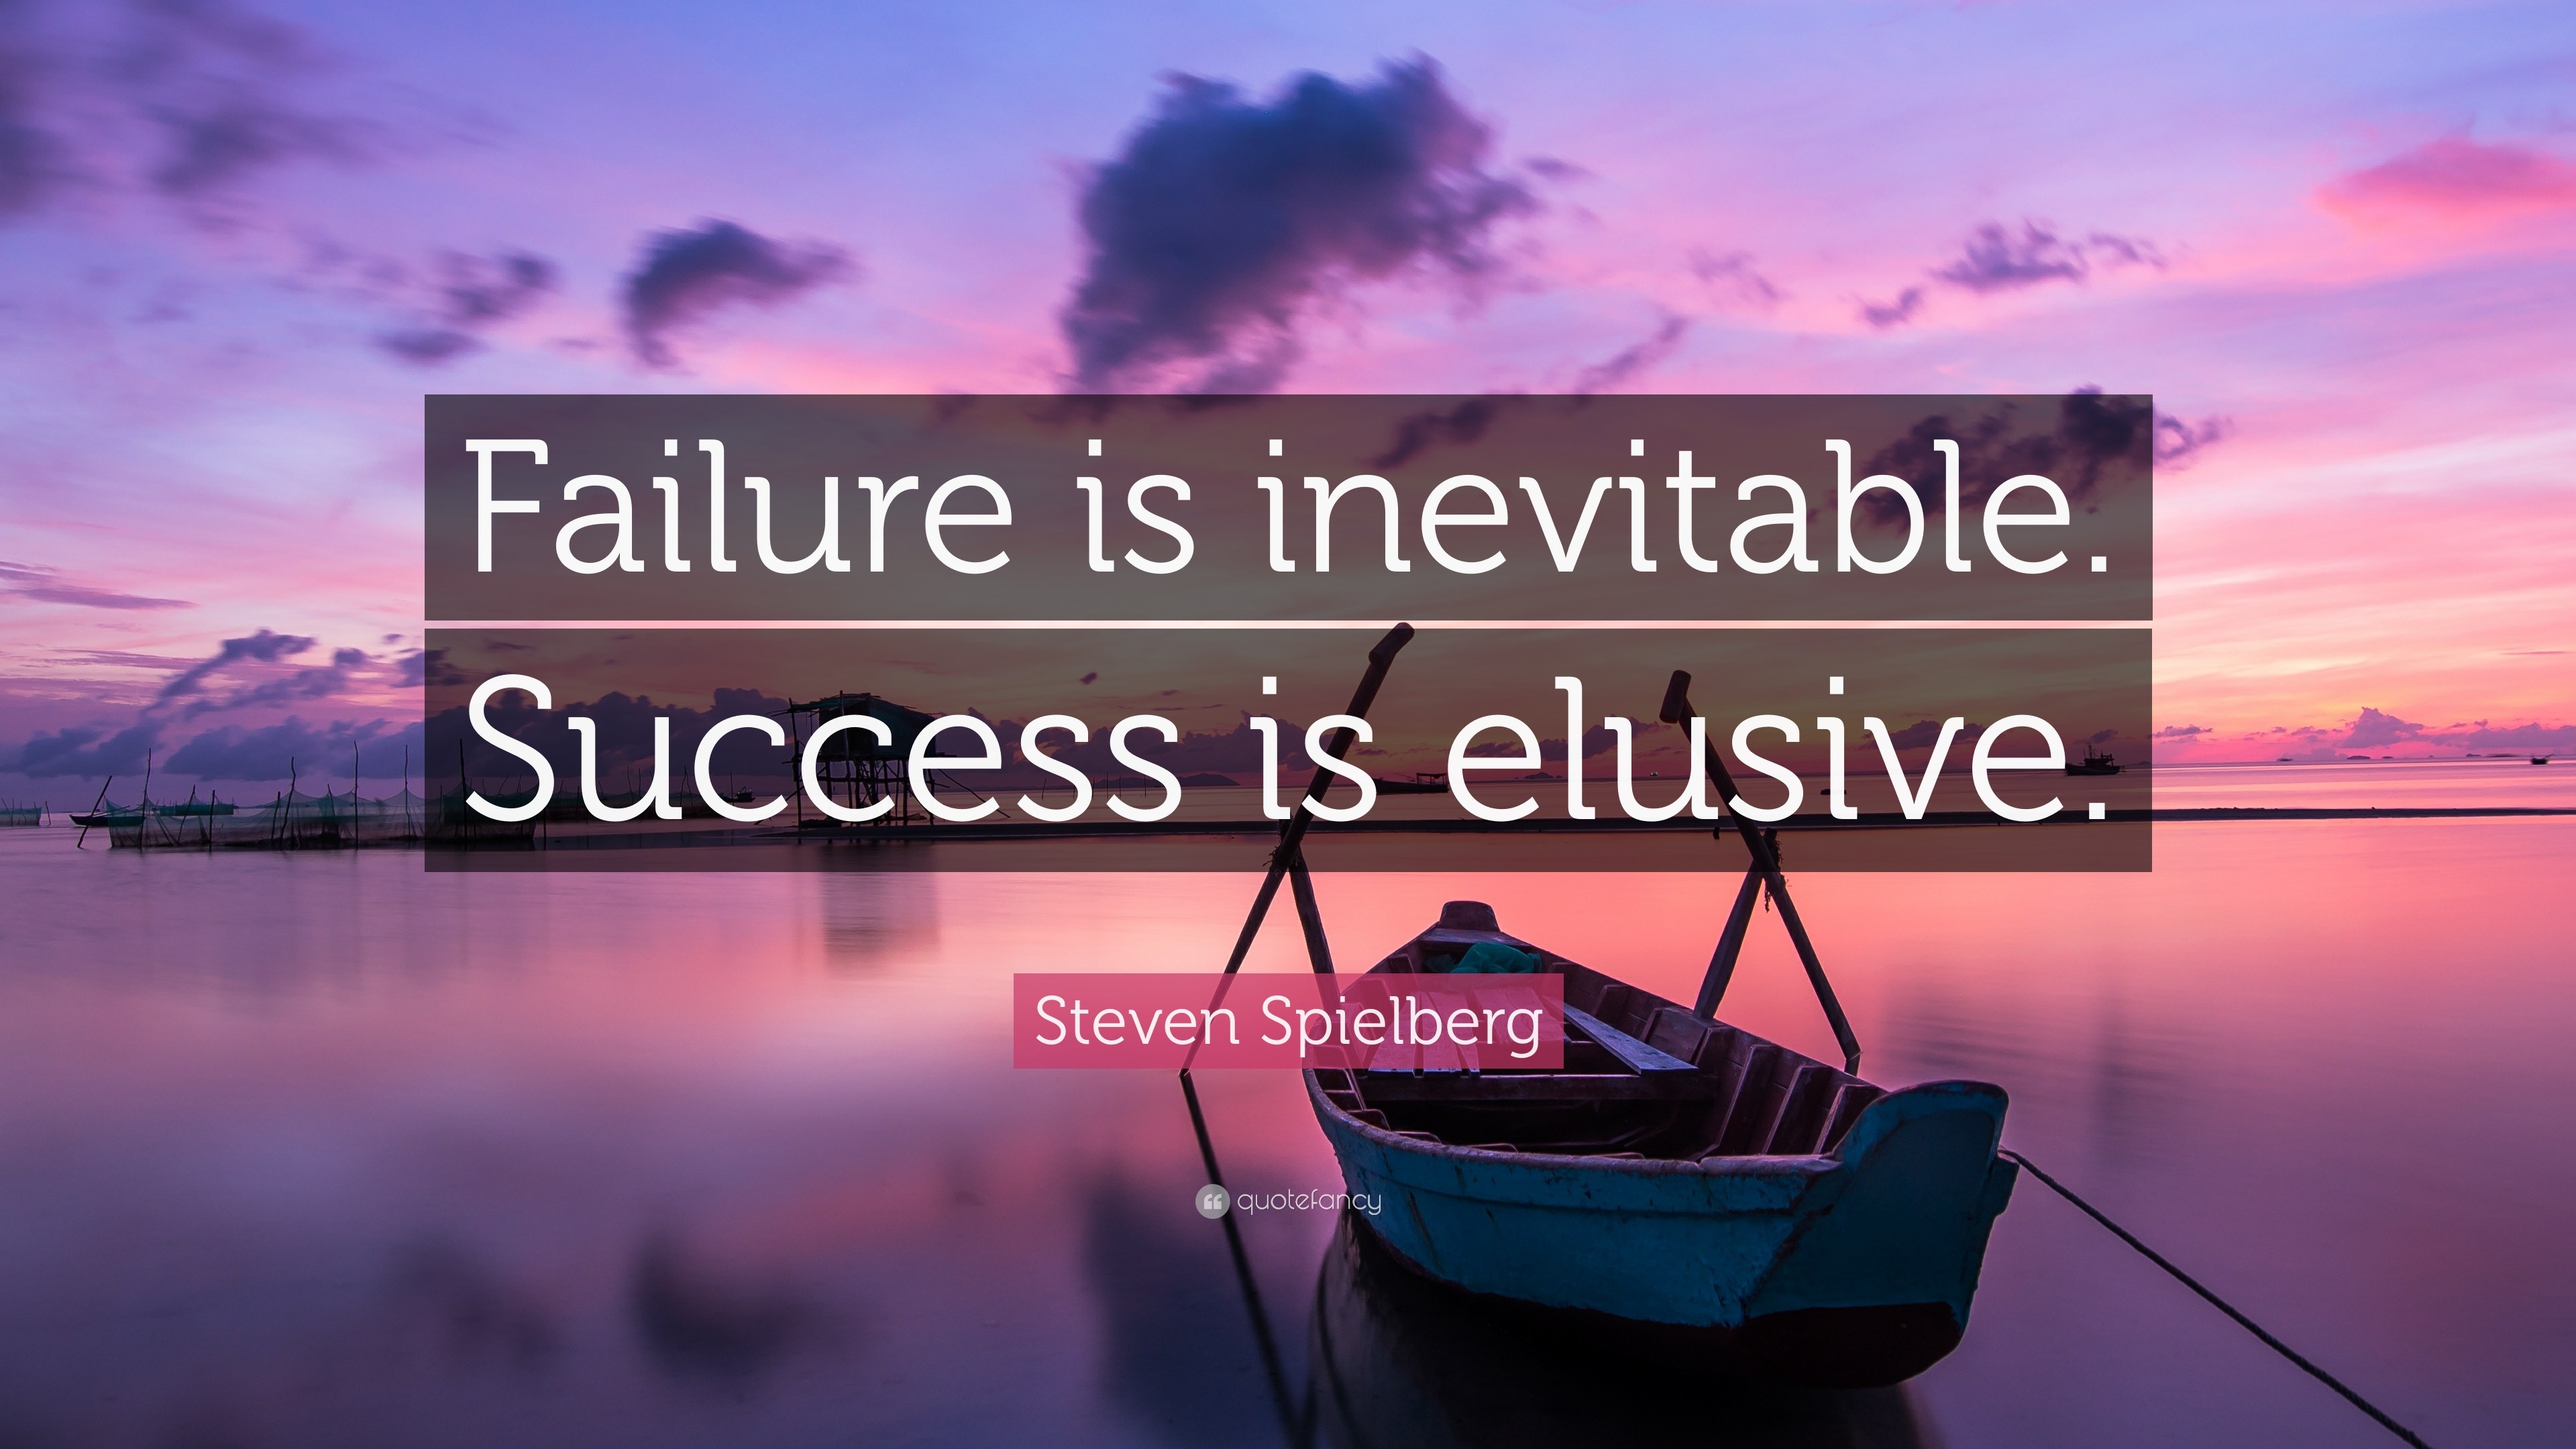 Steven Spielberg Quote: “Failure is inevitable. Success is elusive